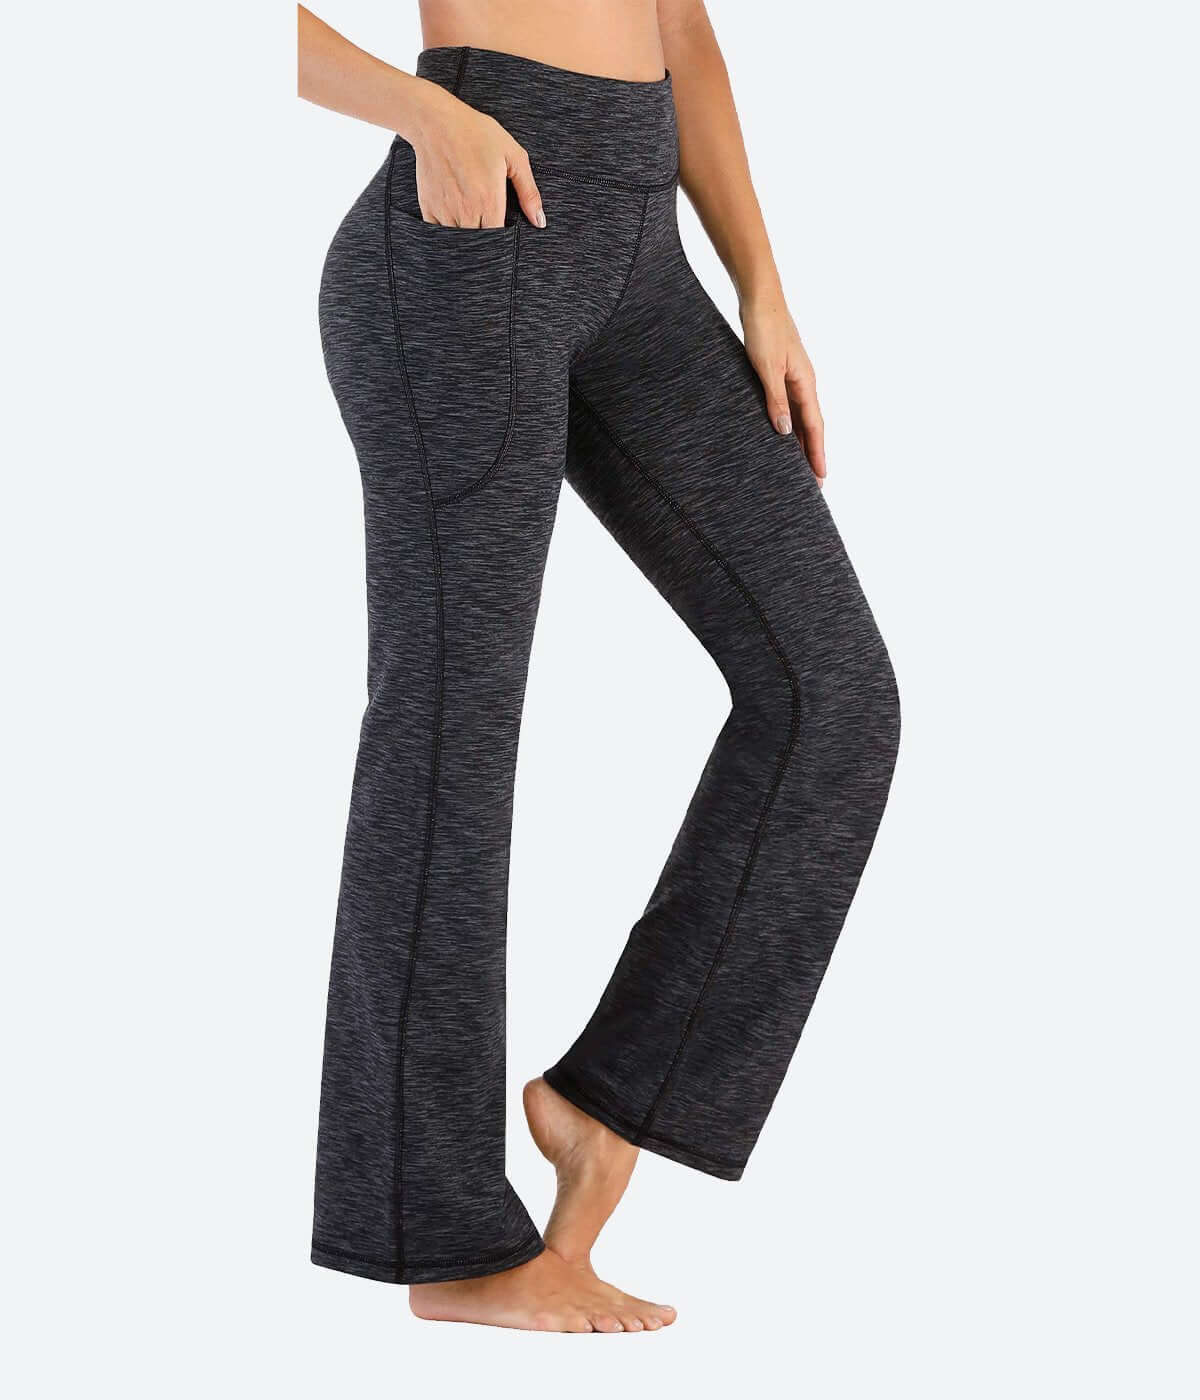 Heathyoga Women's Yoga Pants Bootcut Yoga Pants with Pockets for